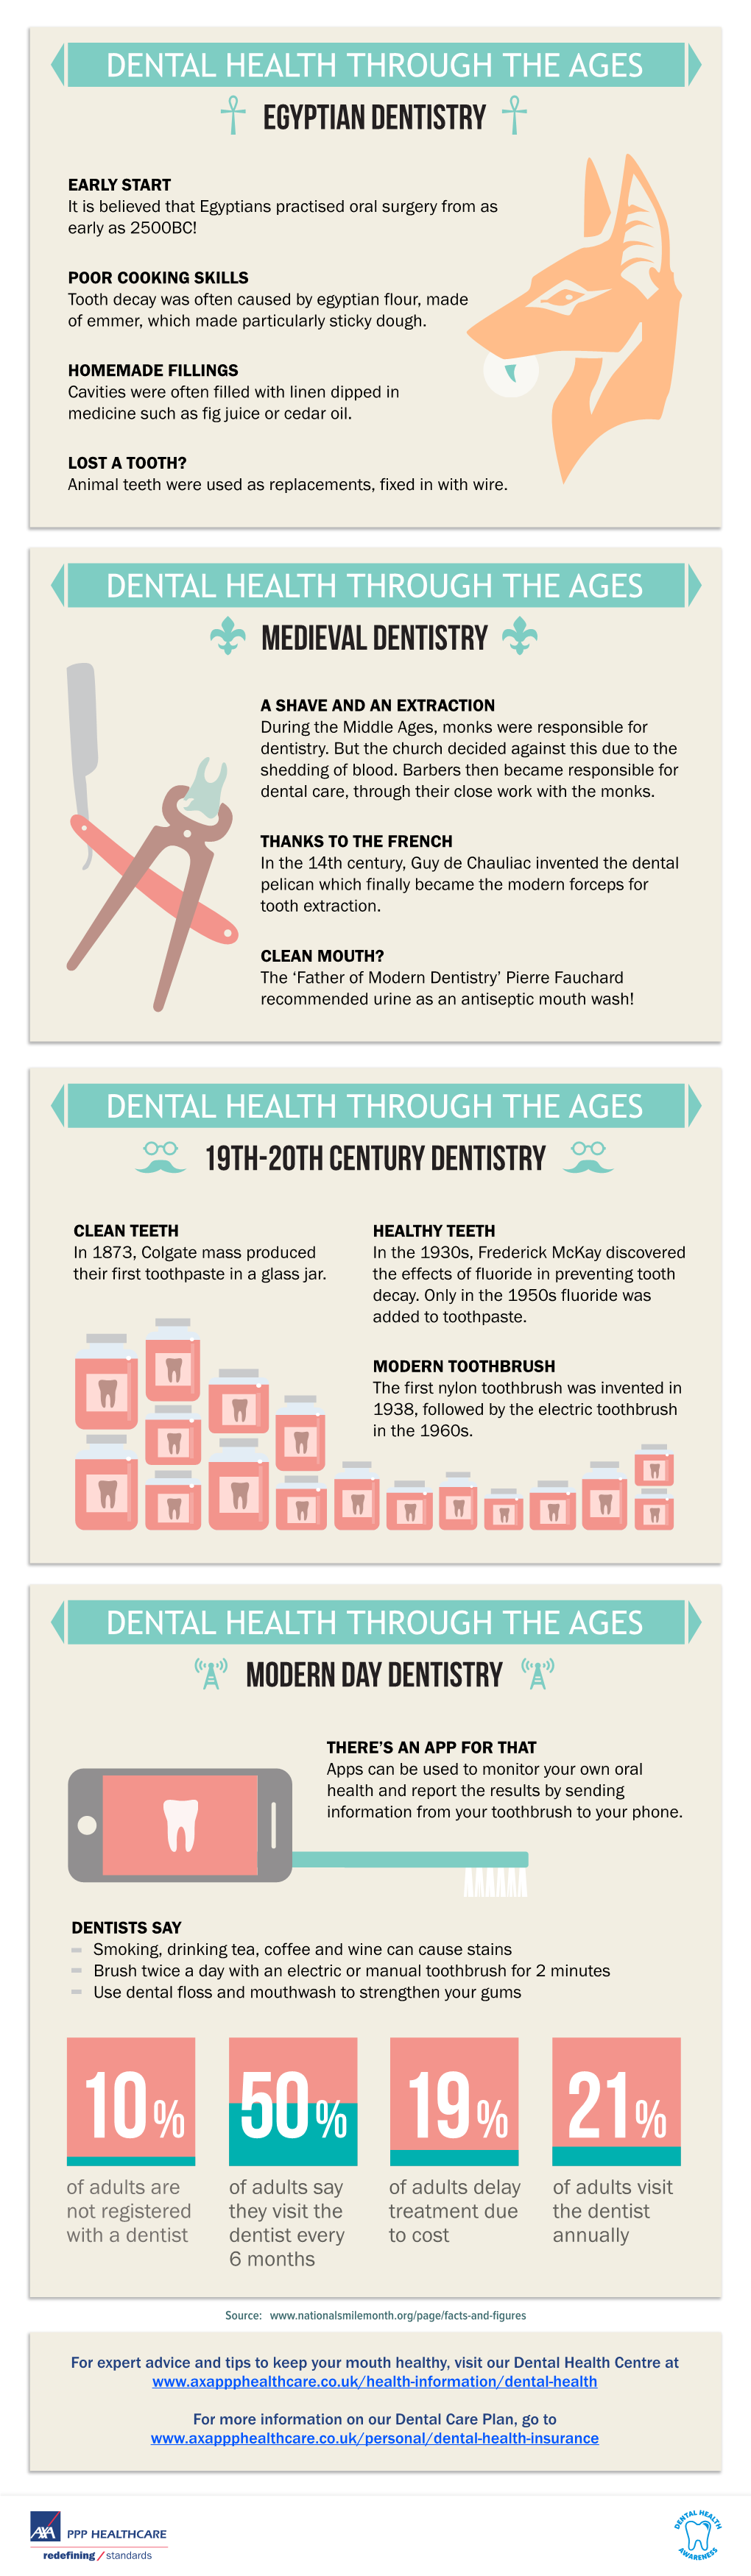 AXAPPP Socialoutreach Dental Health Through the Ages